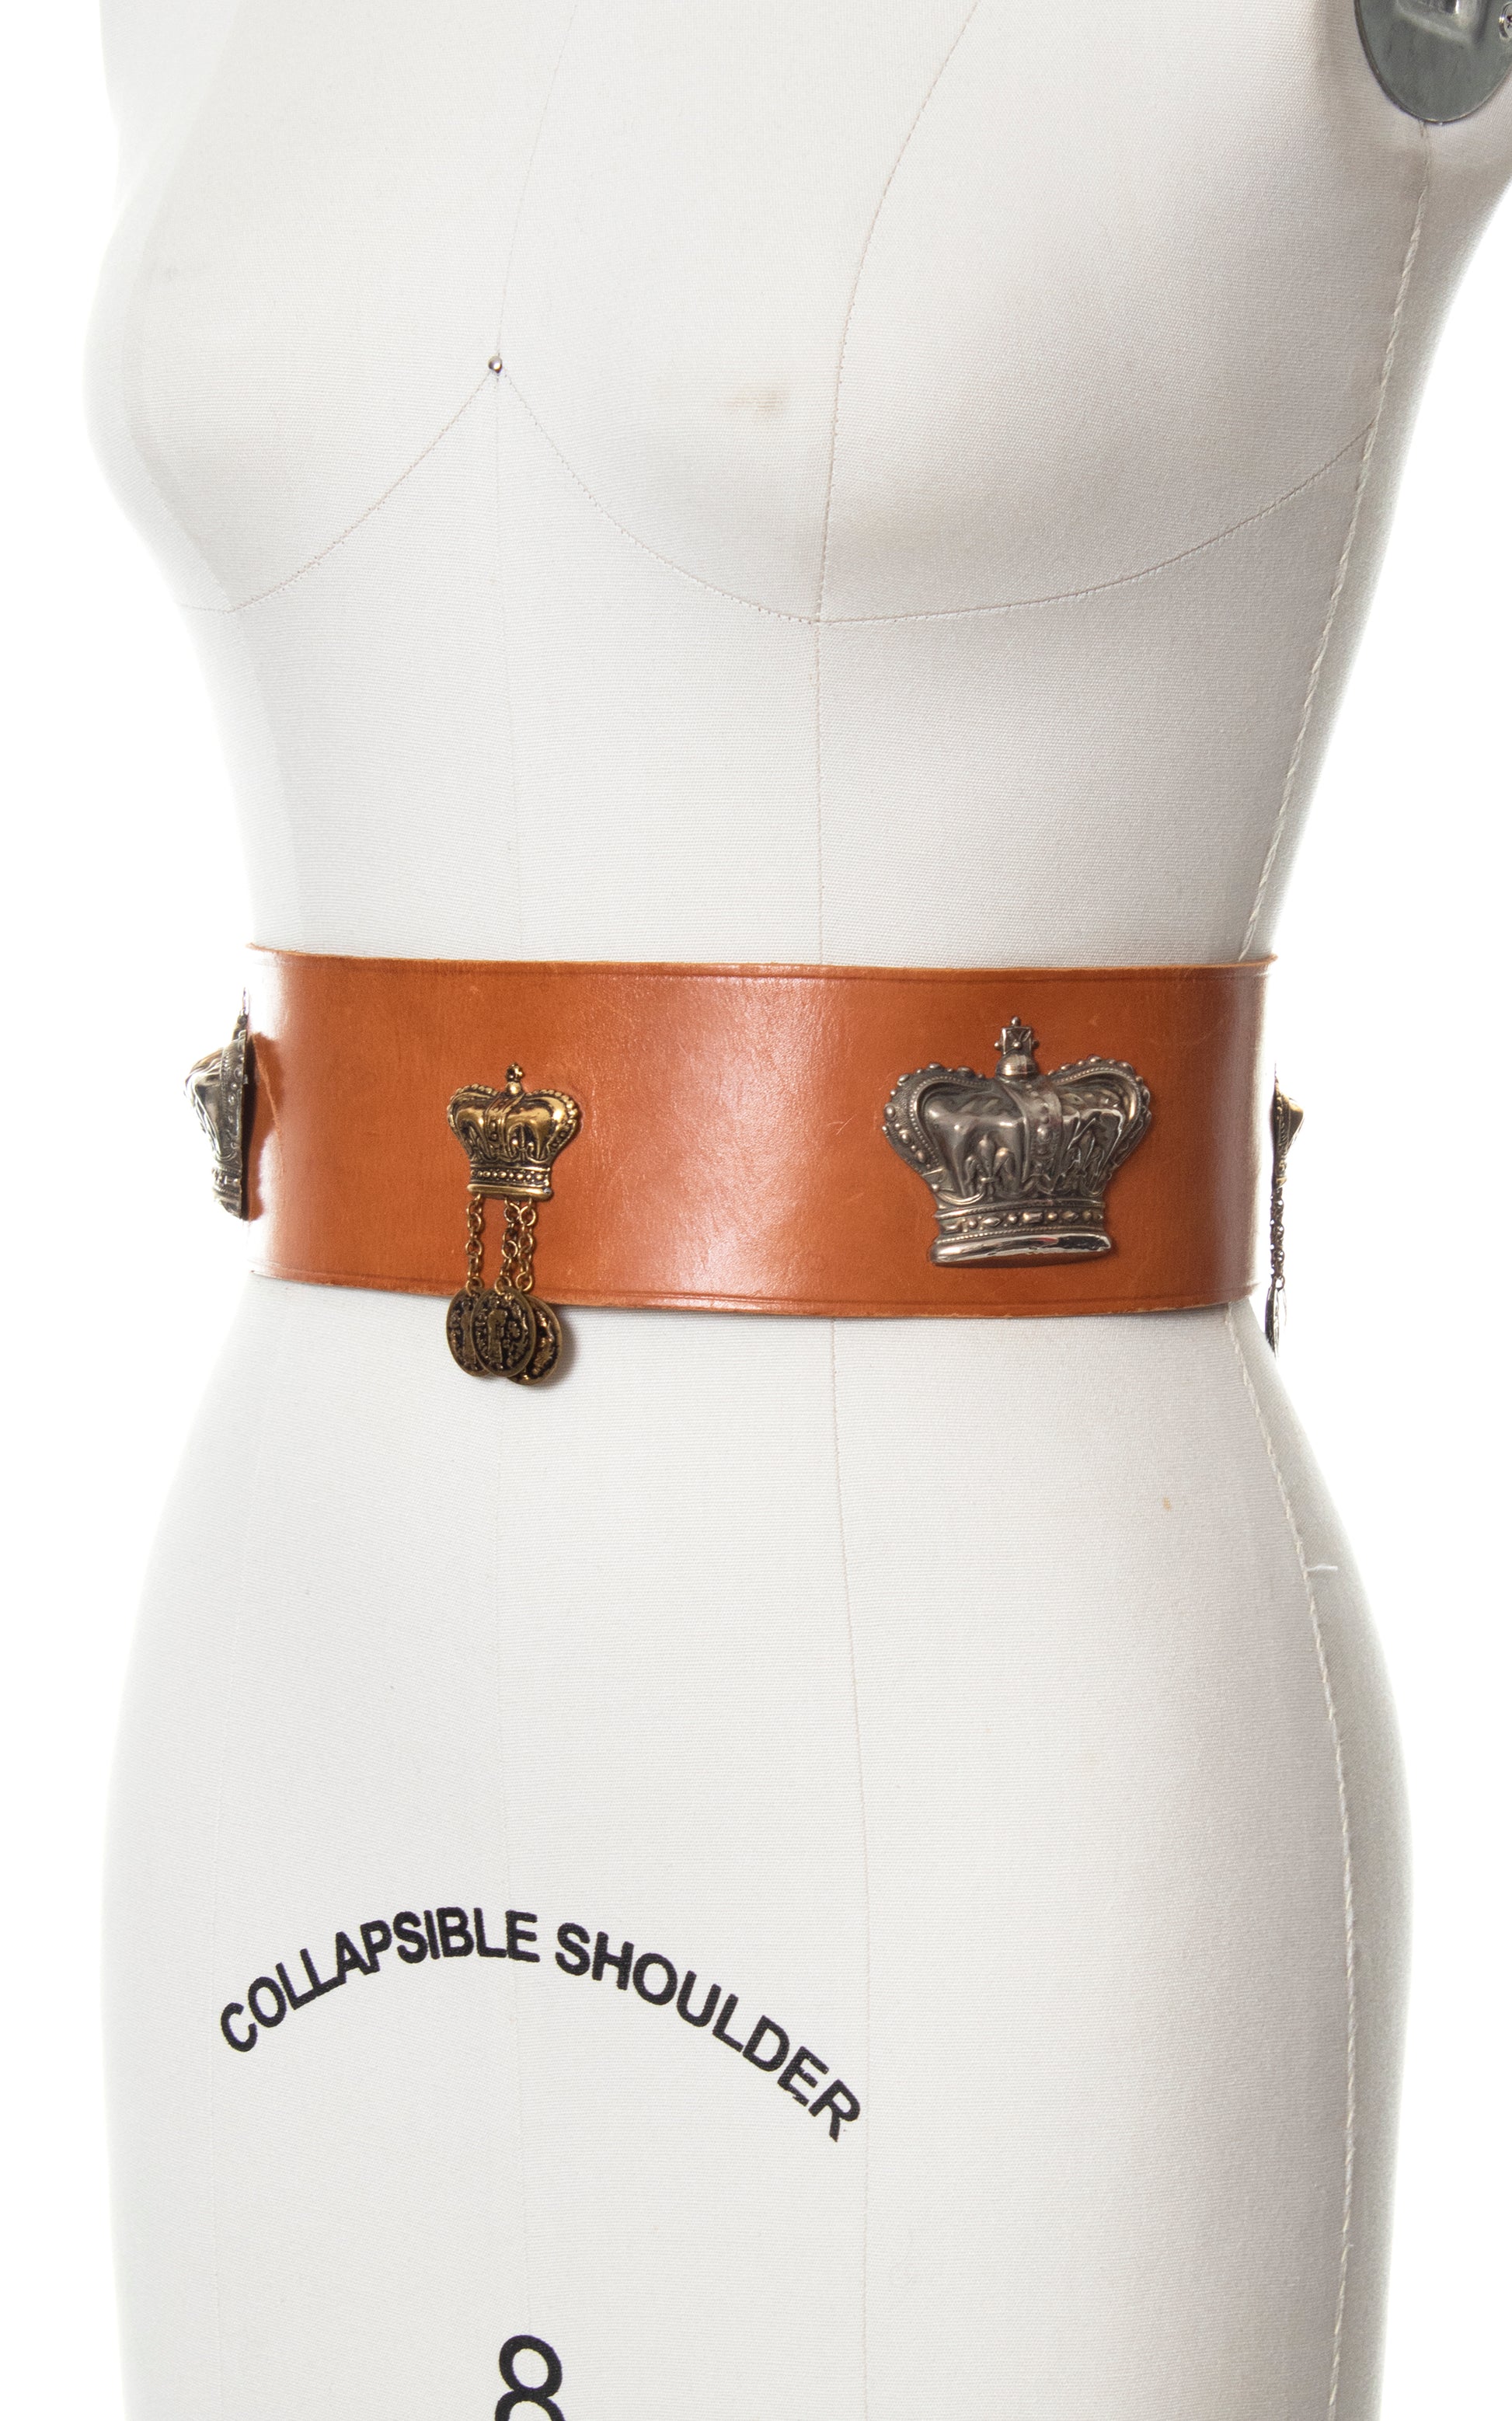 Vintage 60s 1960s Crowns Novelty Brown Leather Cinch Belt Birthday Life Vintage